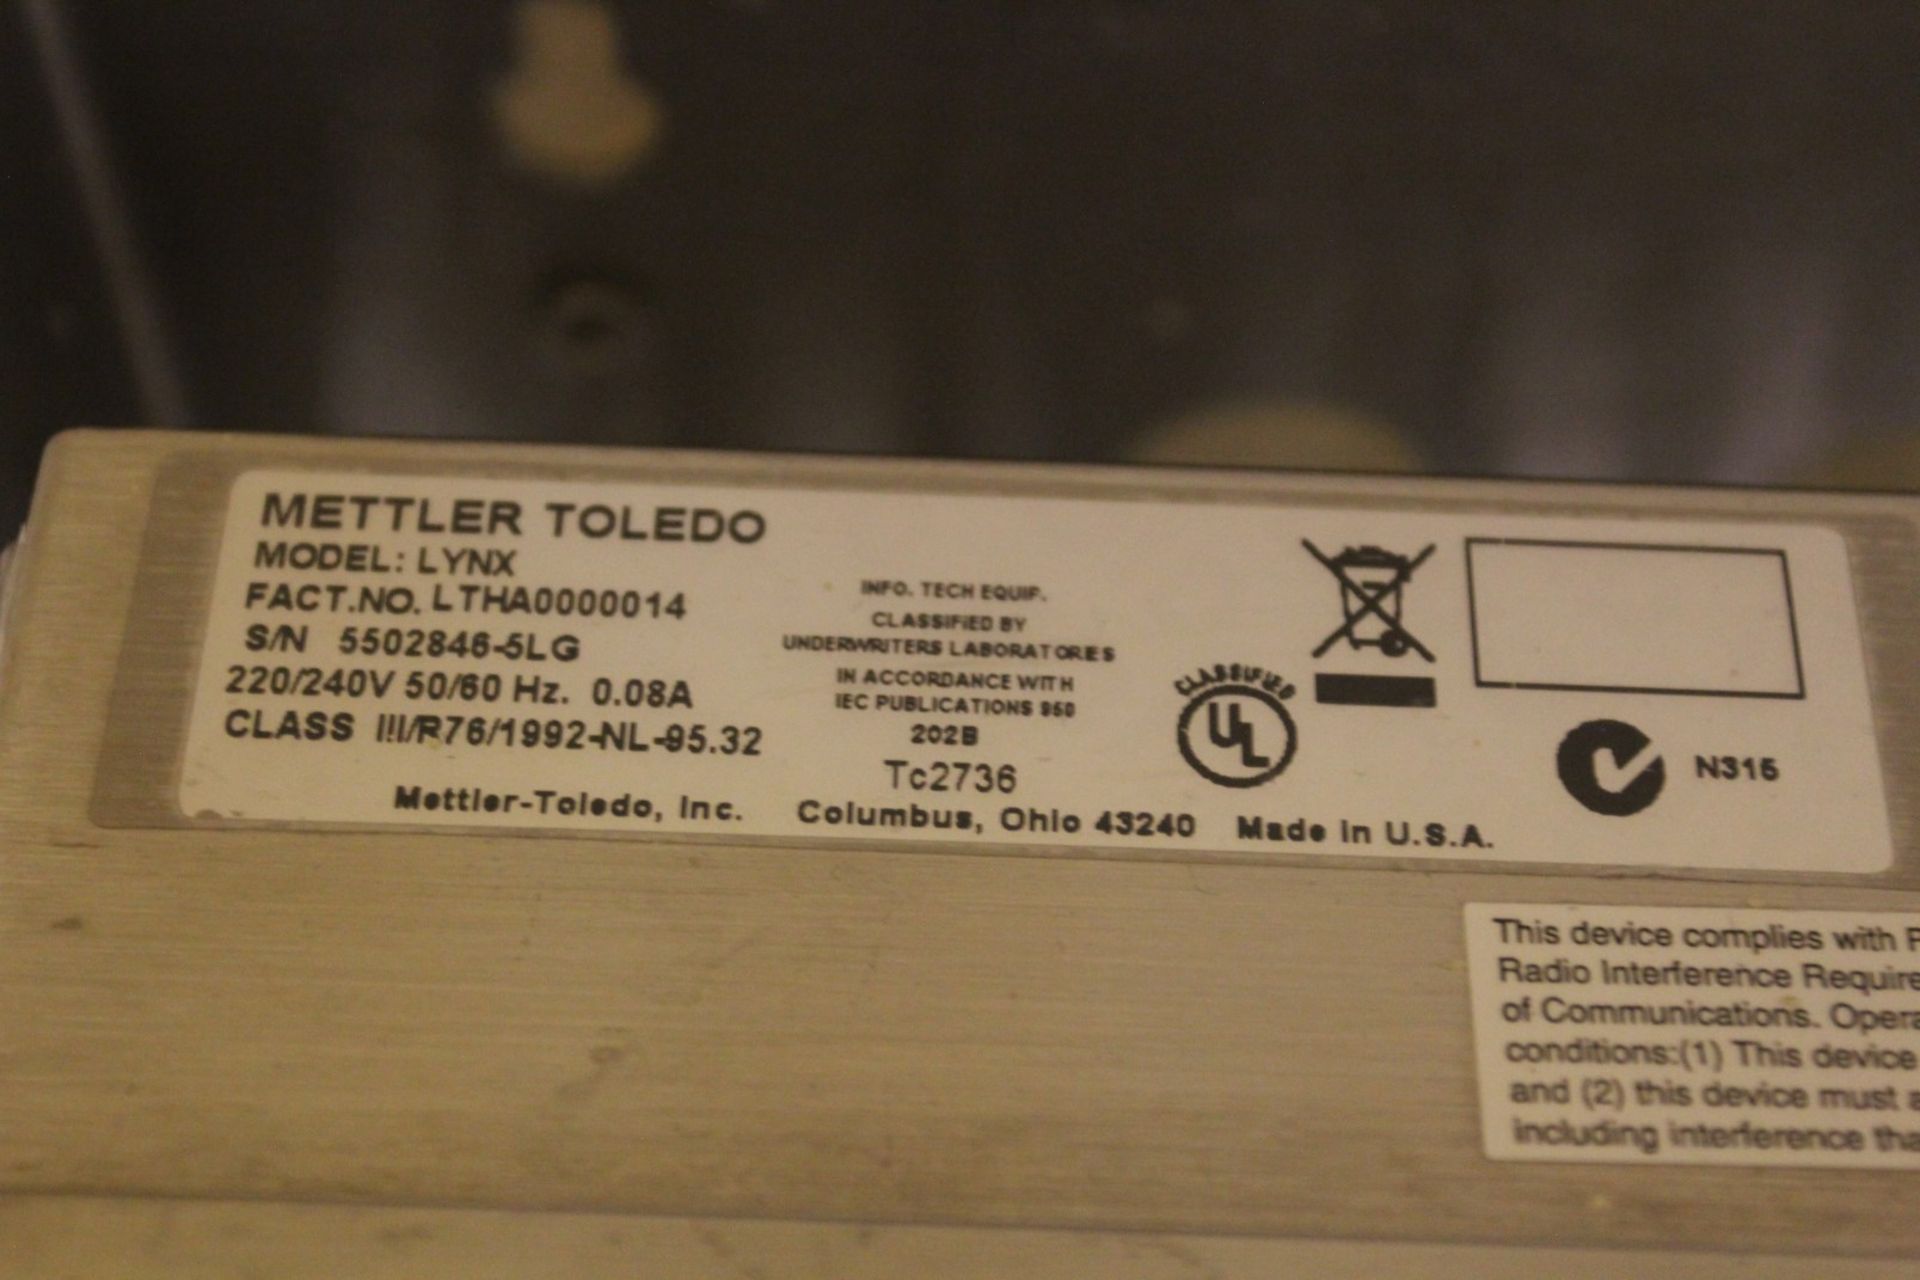 800 kg Stainless Steel Floor Scale w/ Mettler Toledo Lynx Digital Readout, s/n 5502846-5LG - Bild 4 aus 4